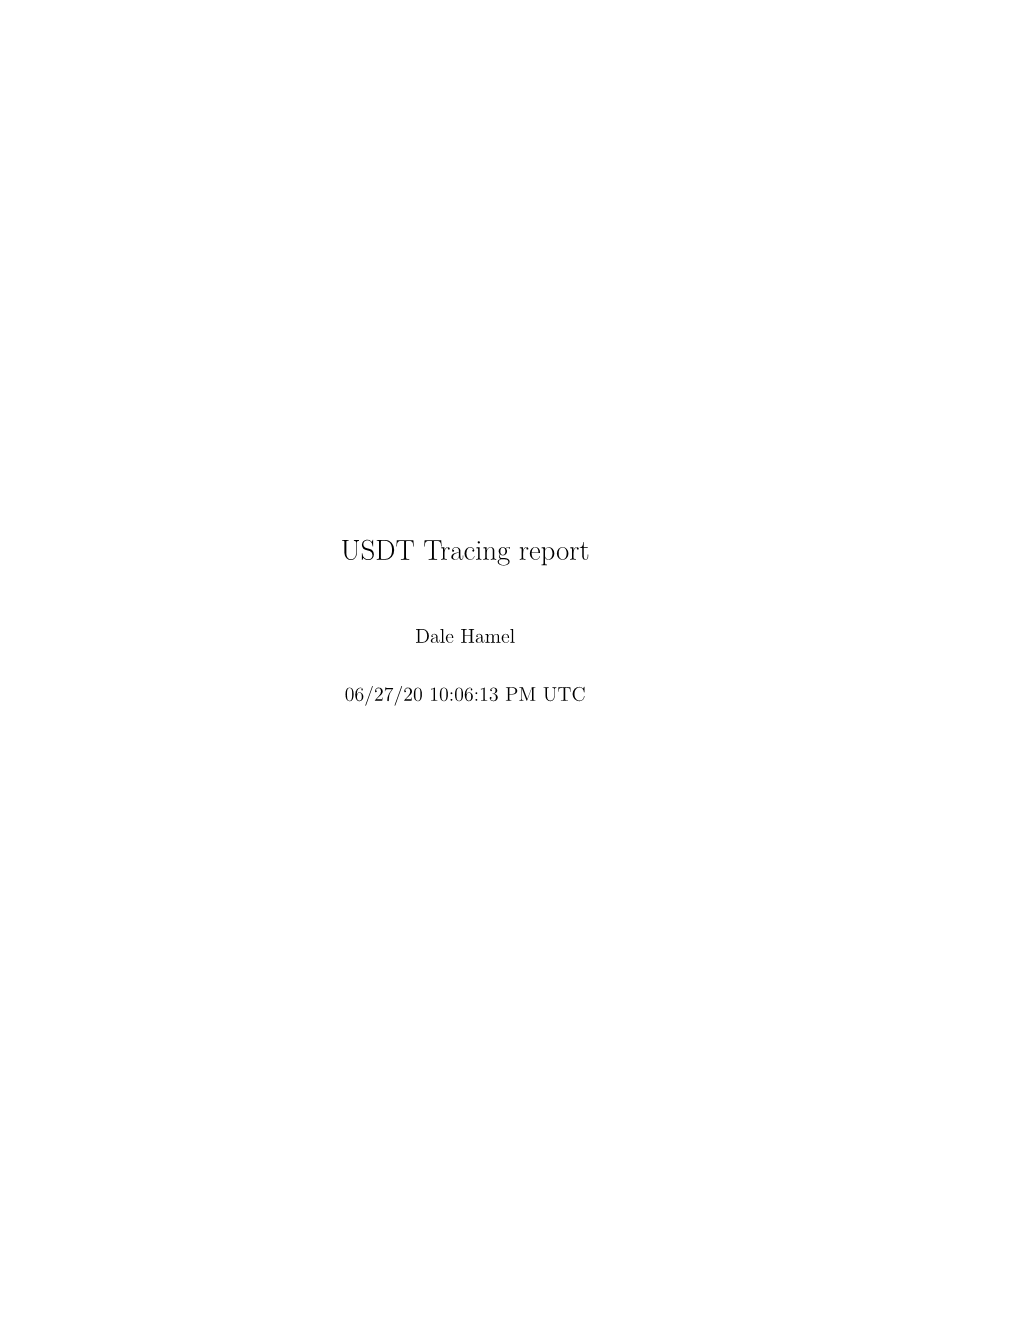 USDT Tracing Report